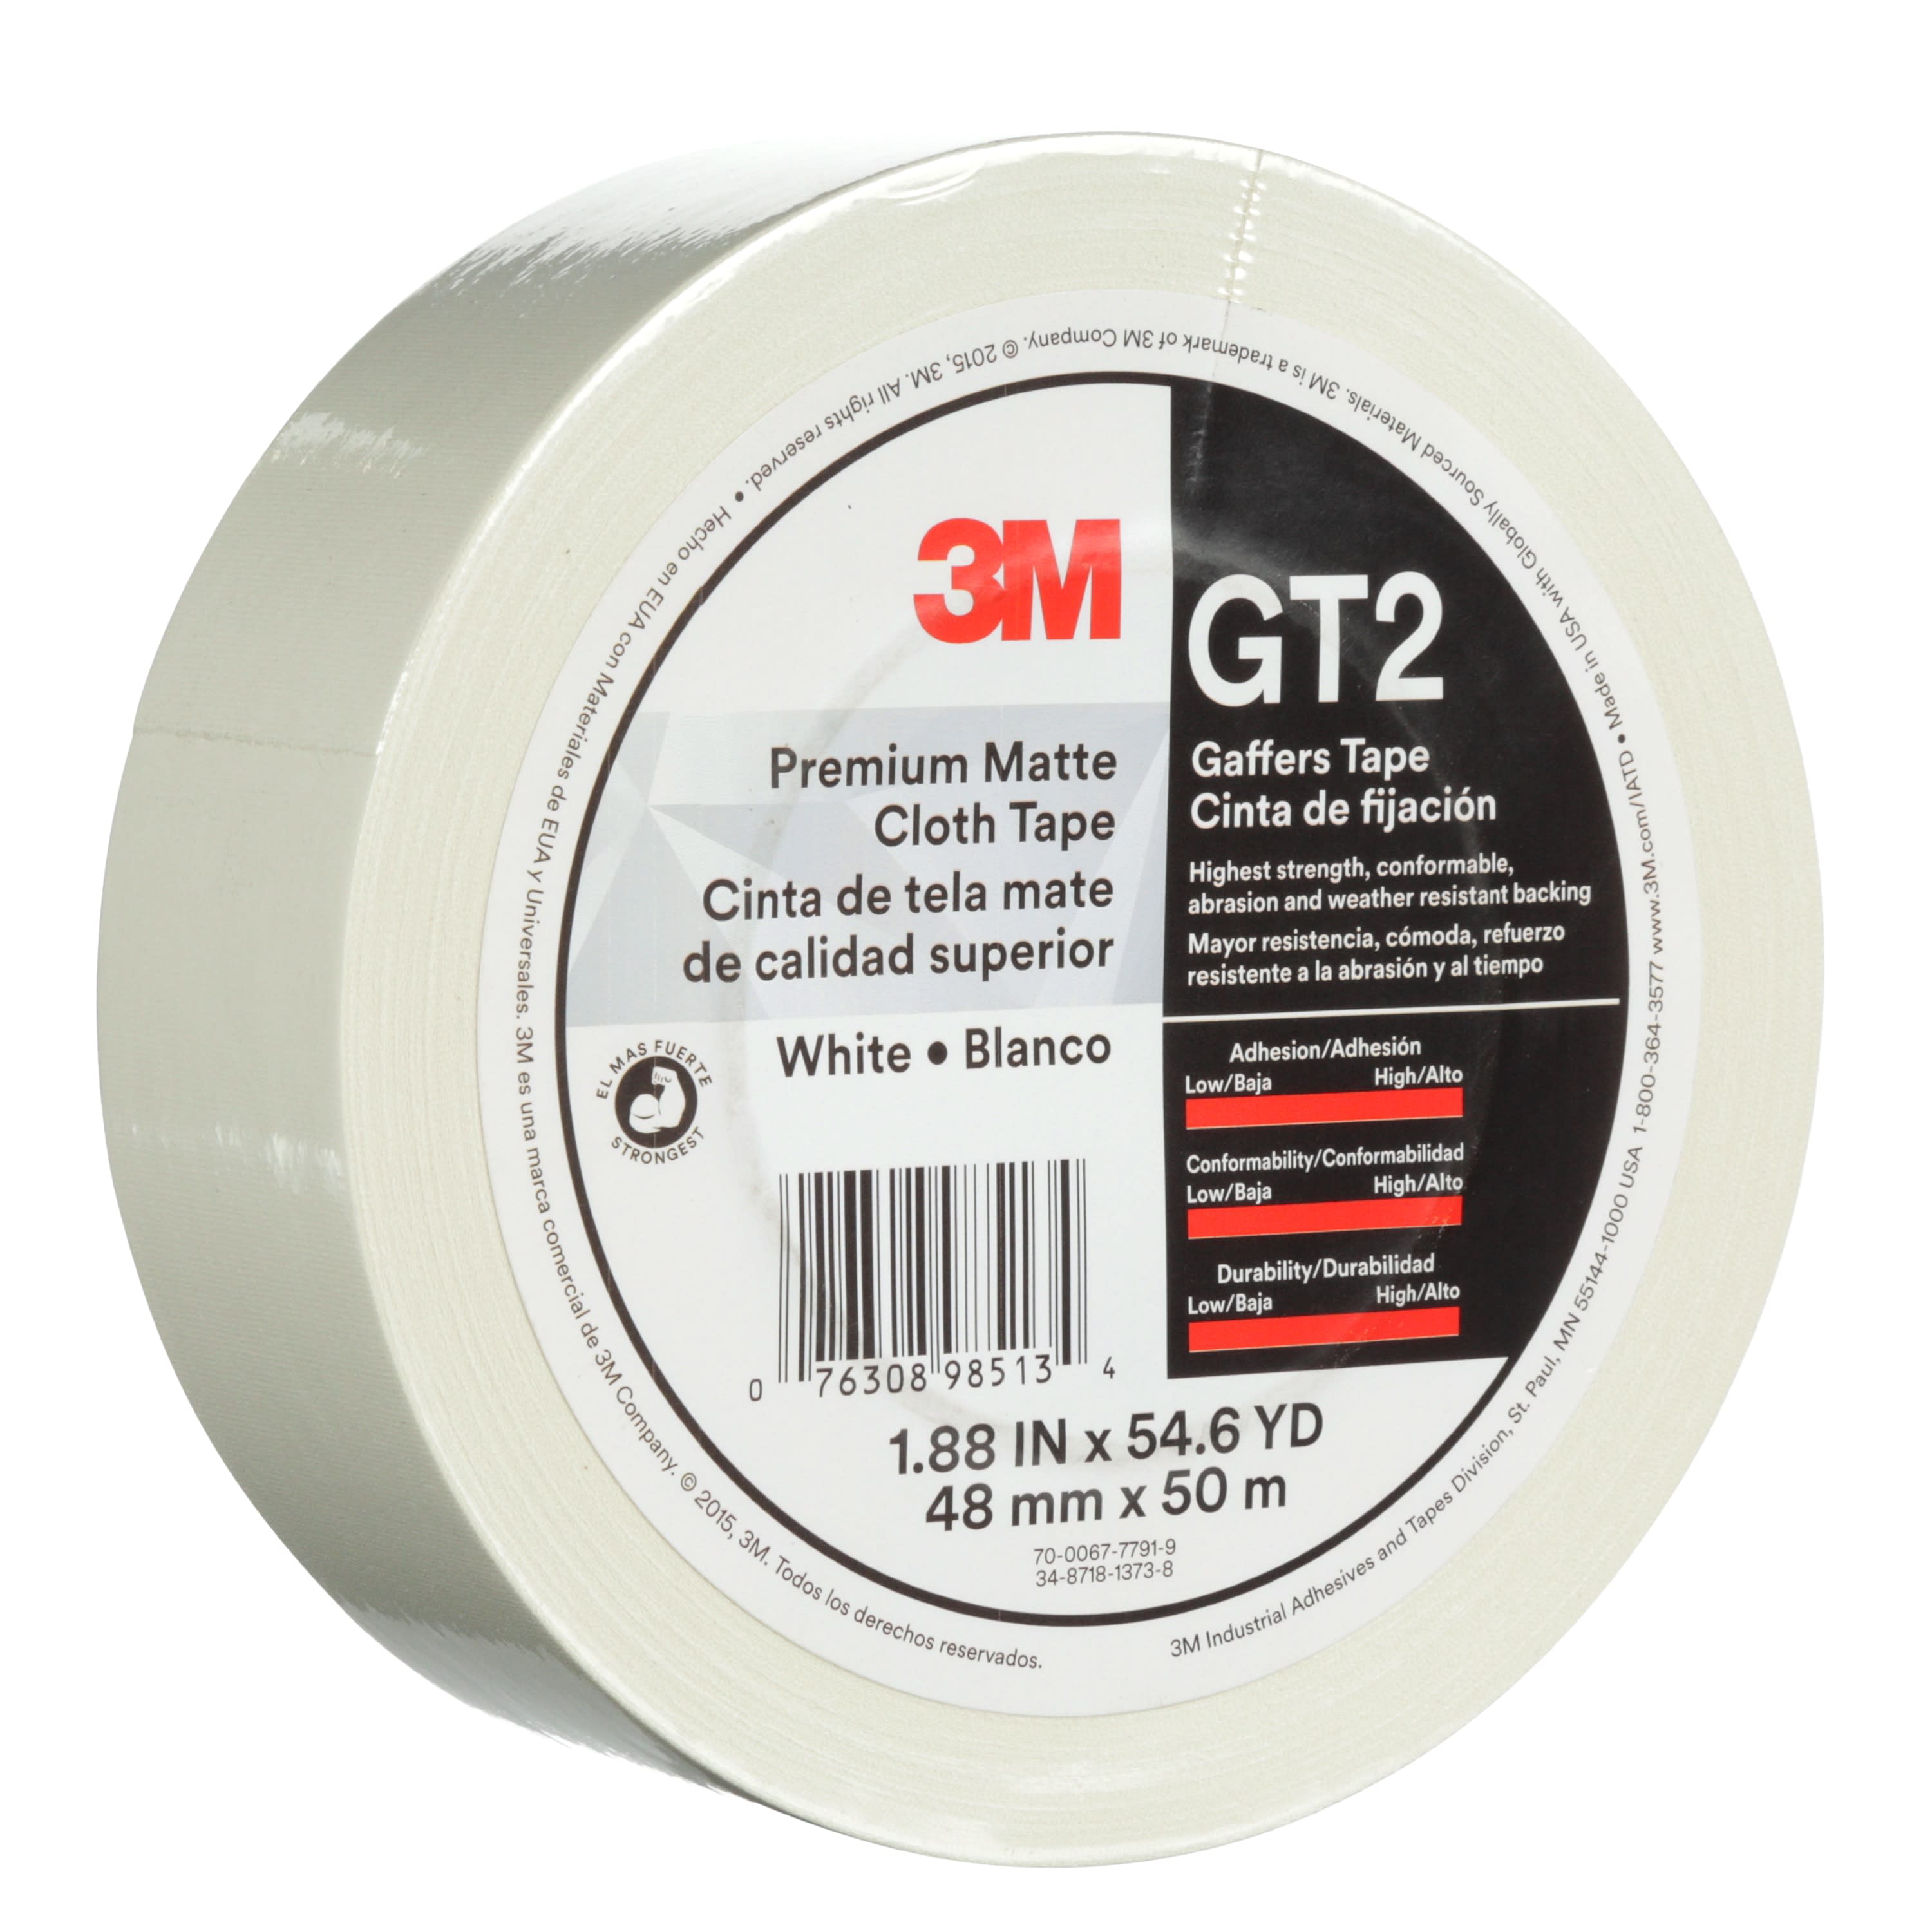 3M™ Premium Matte Cloth (Gaffers) Tape GT2, White, 48 mm x 50 m 11 mil,
24 per case